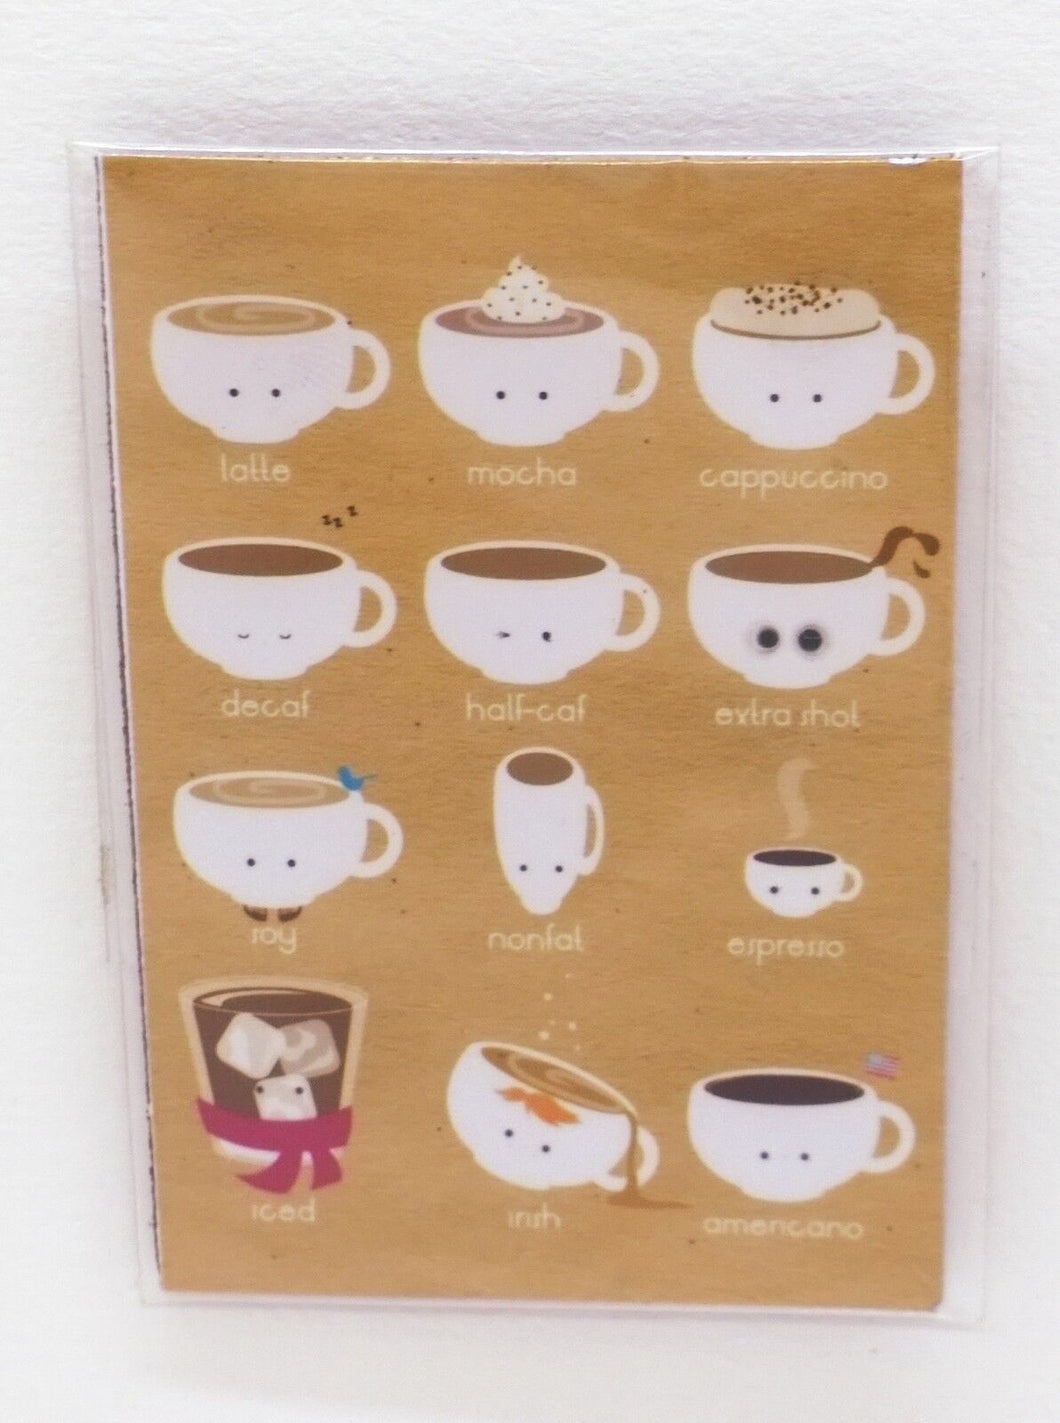 Menu coffee poster Design Magnet Fridge Collectible Home Decor gift